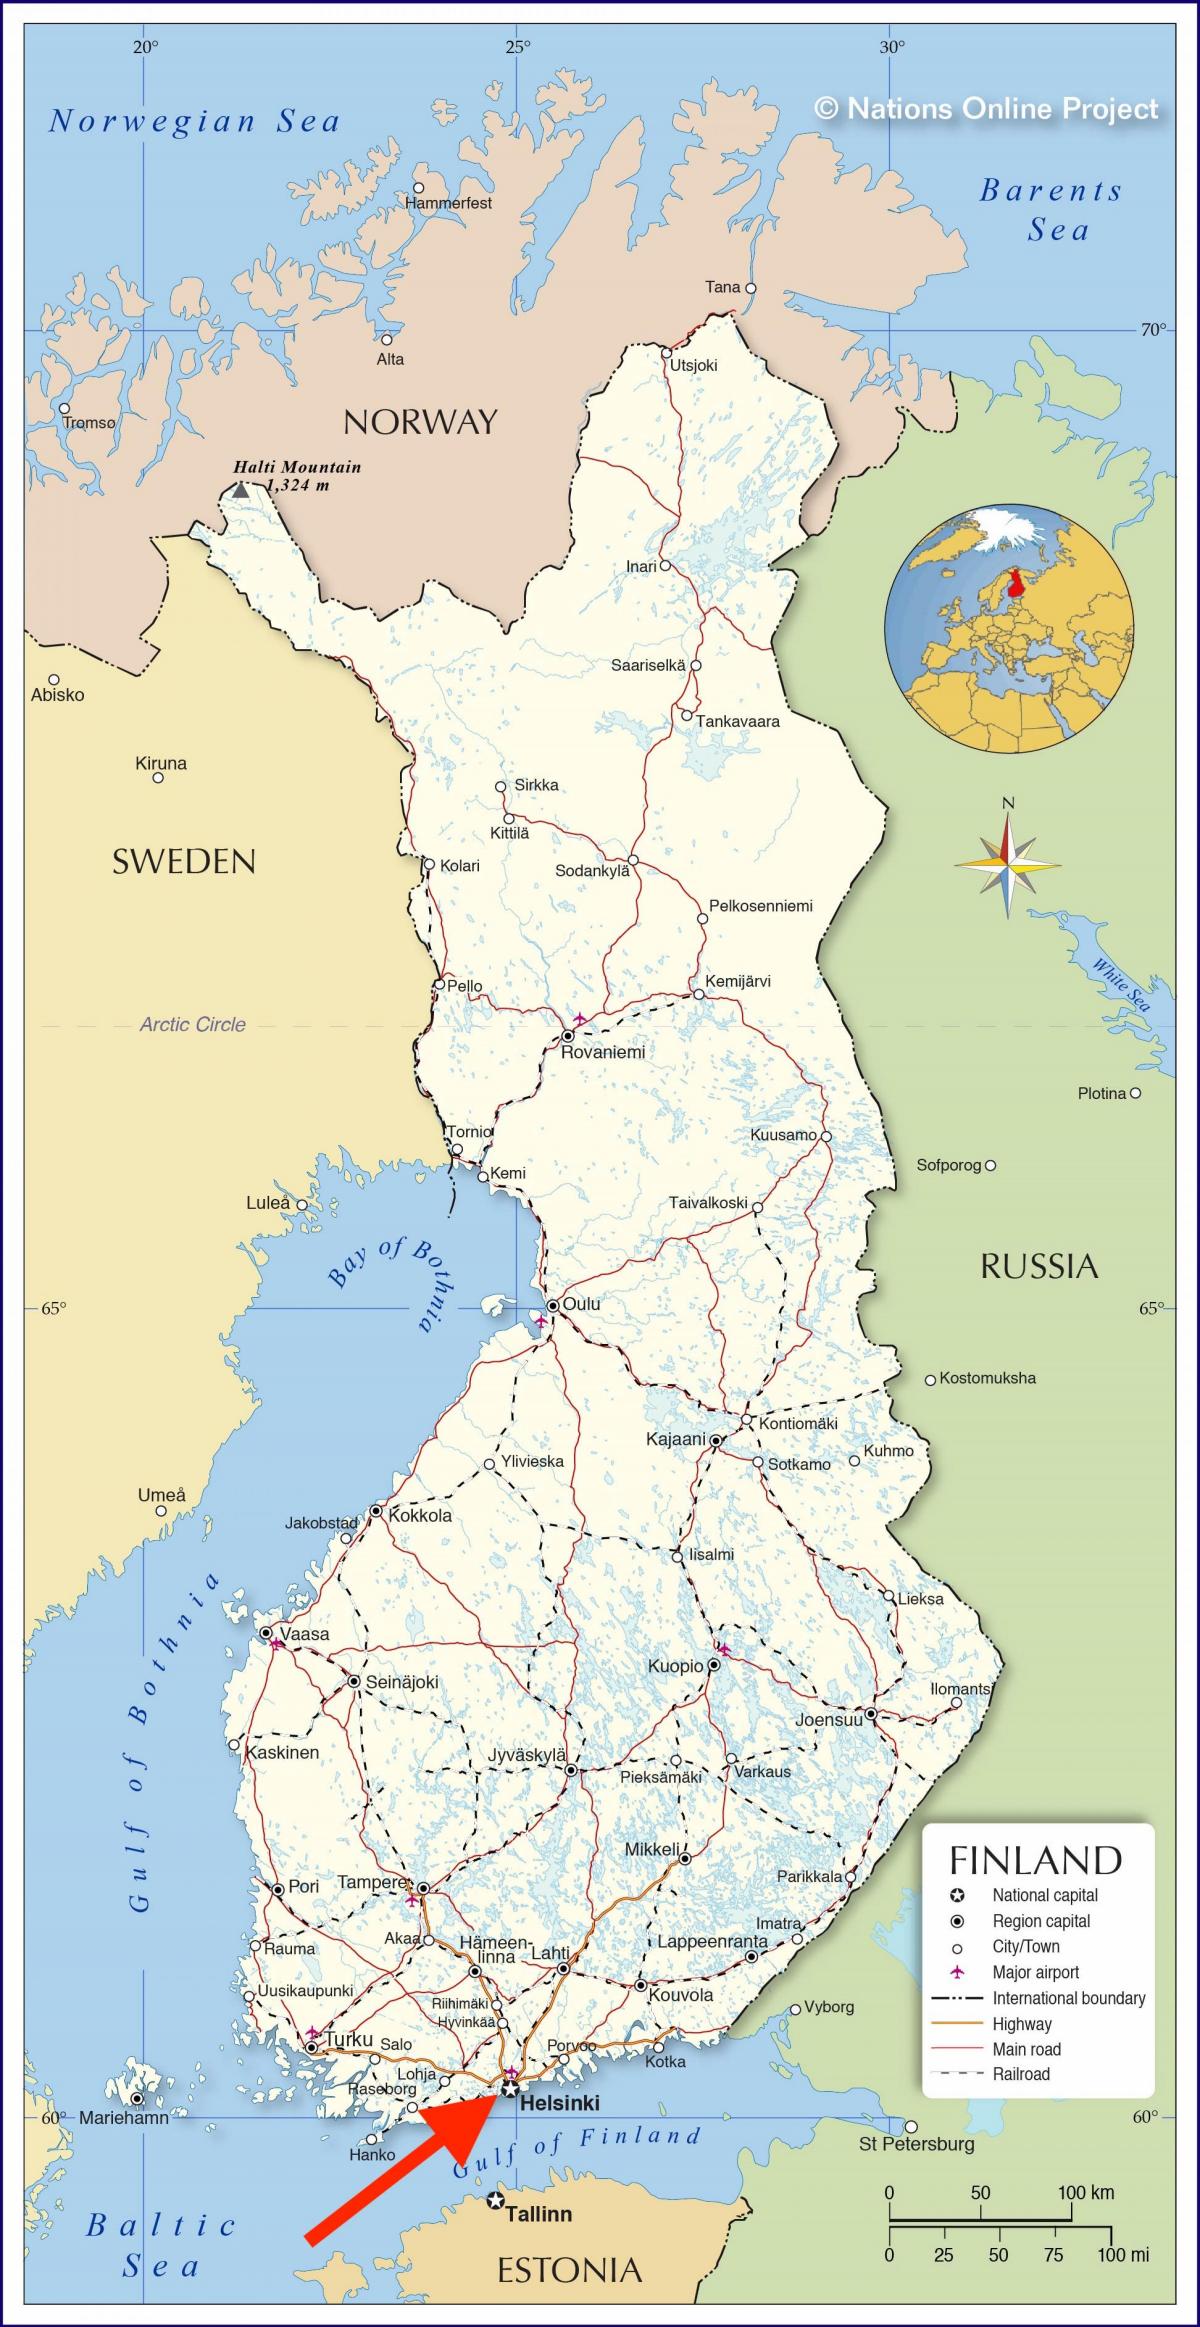 赫尔辛基上的Uusimaa - Finland 地图